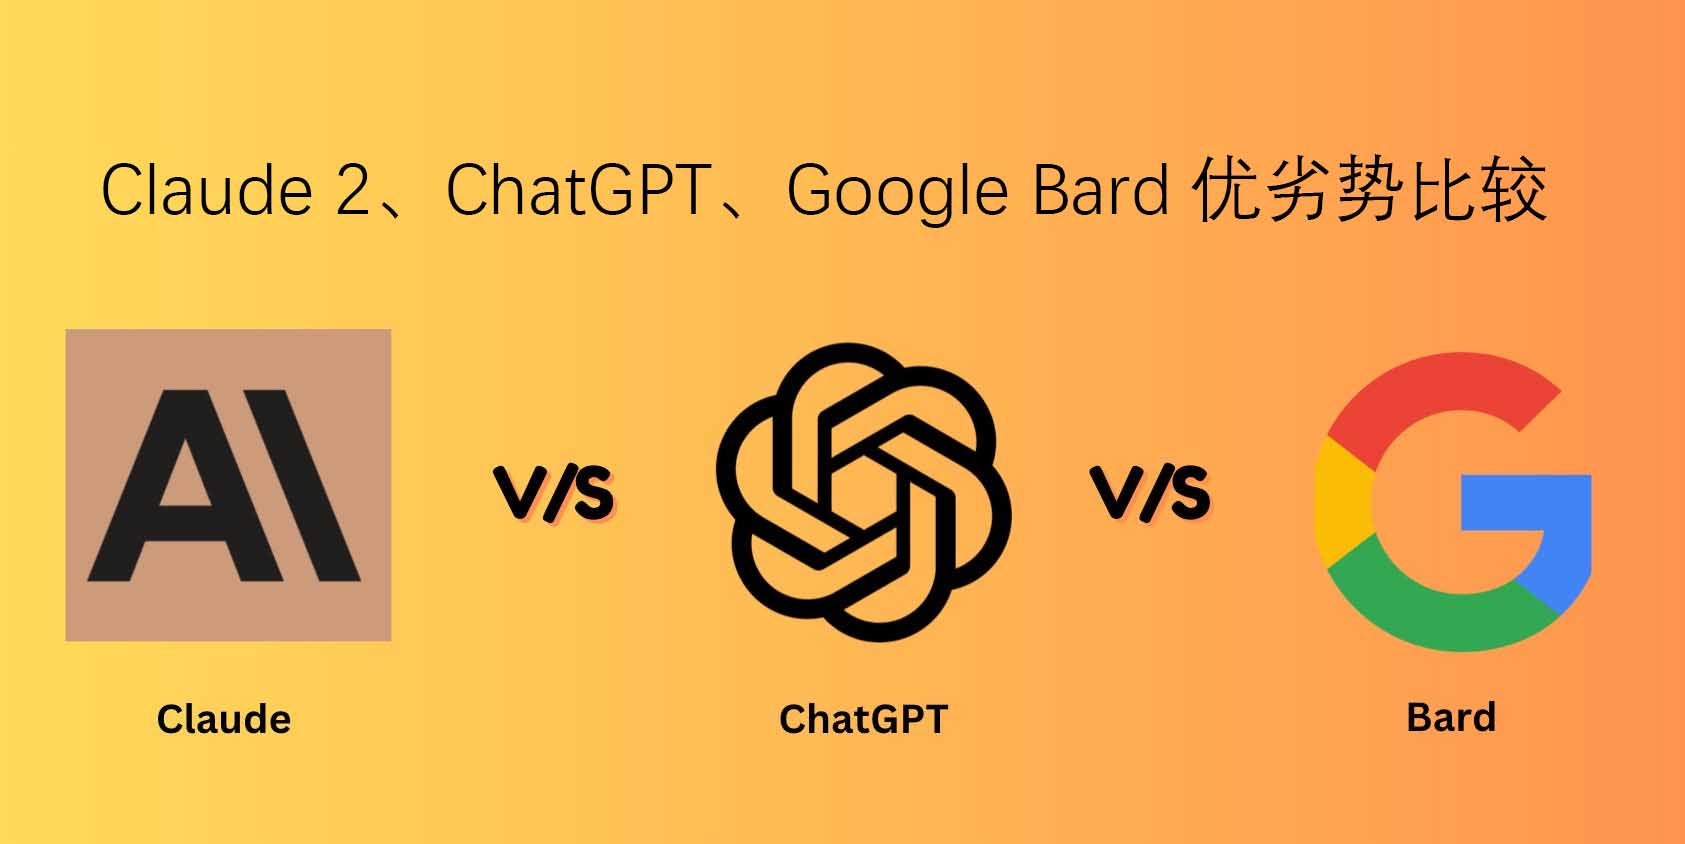 Claude 2、ChatGPT、Google Bard优劣势比较